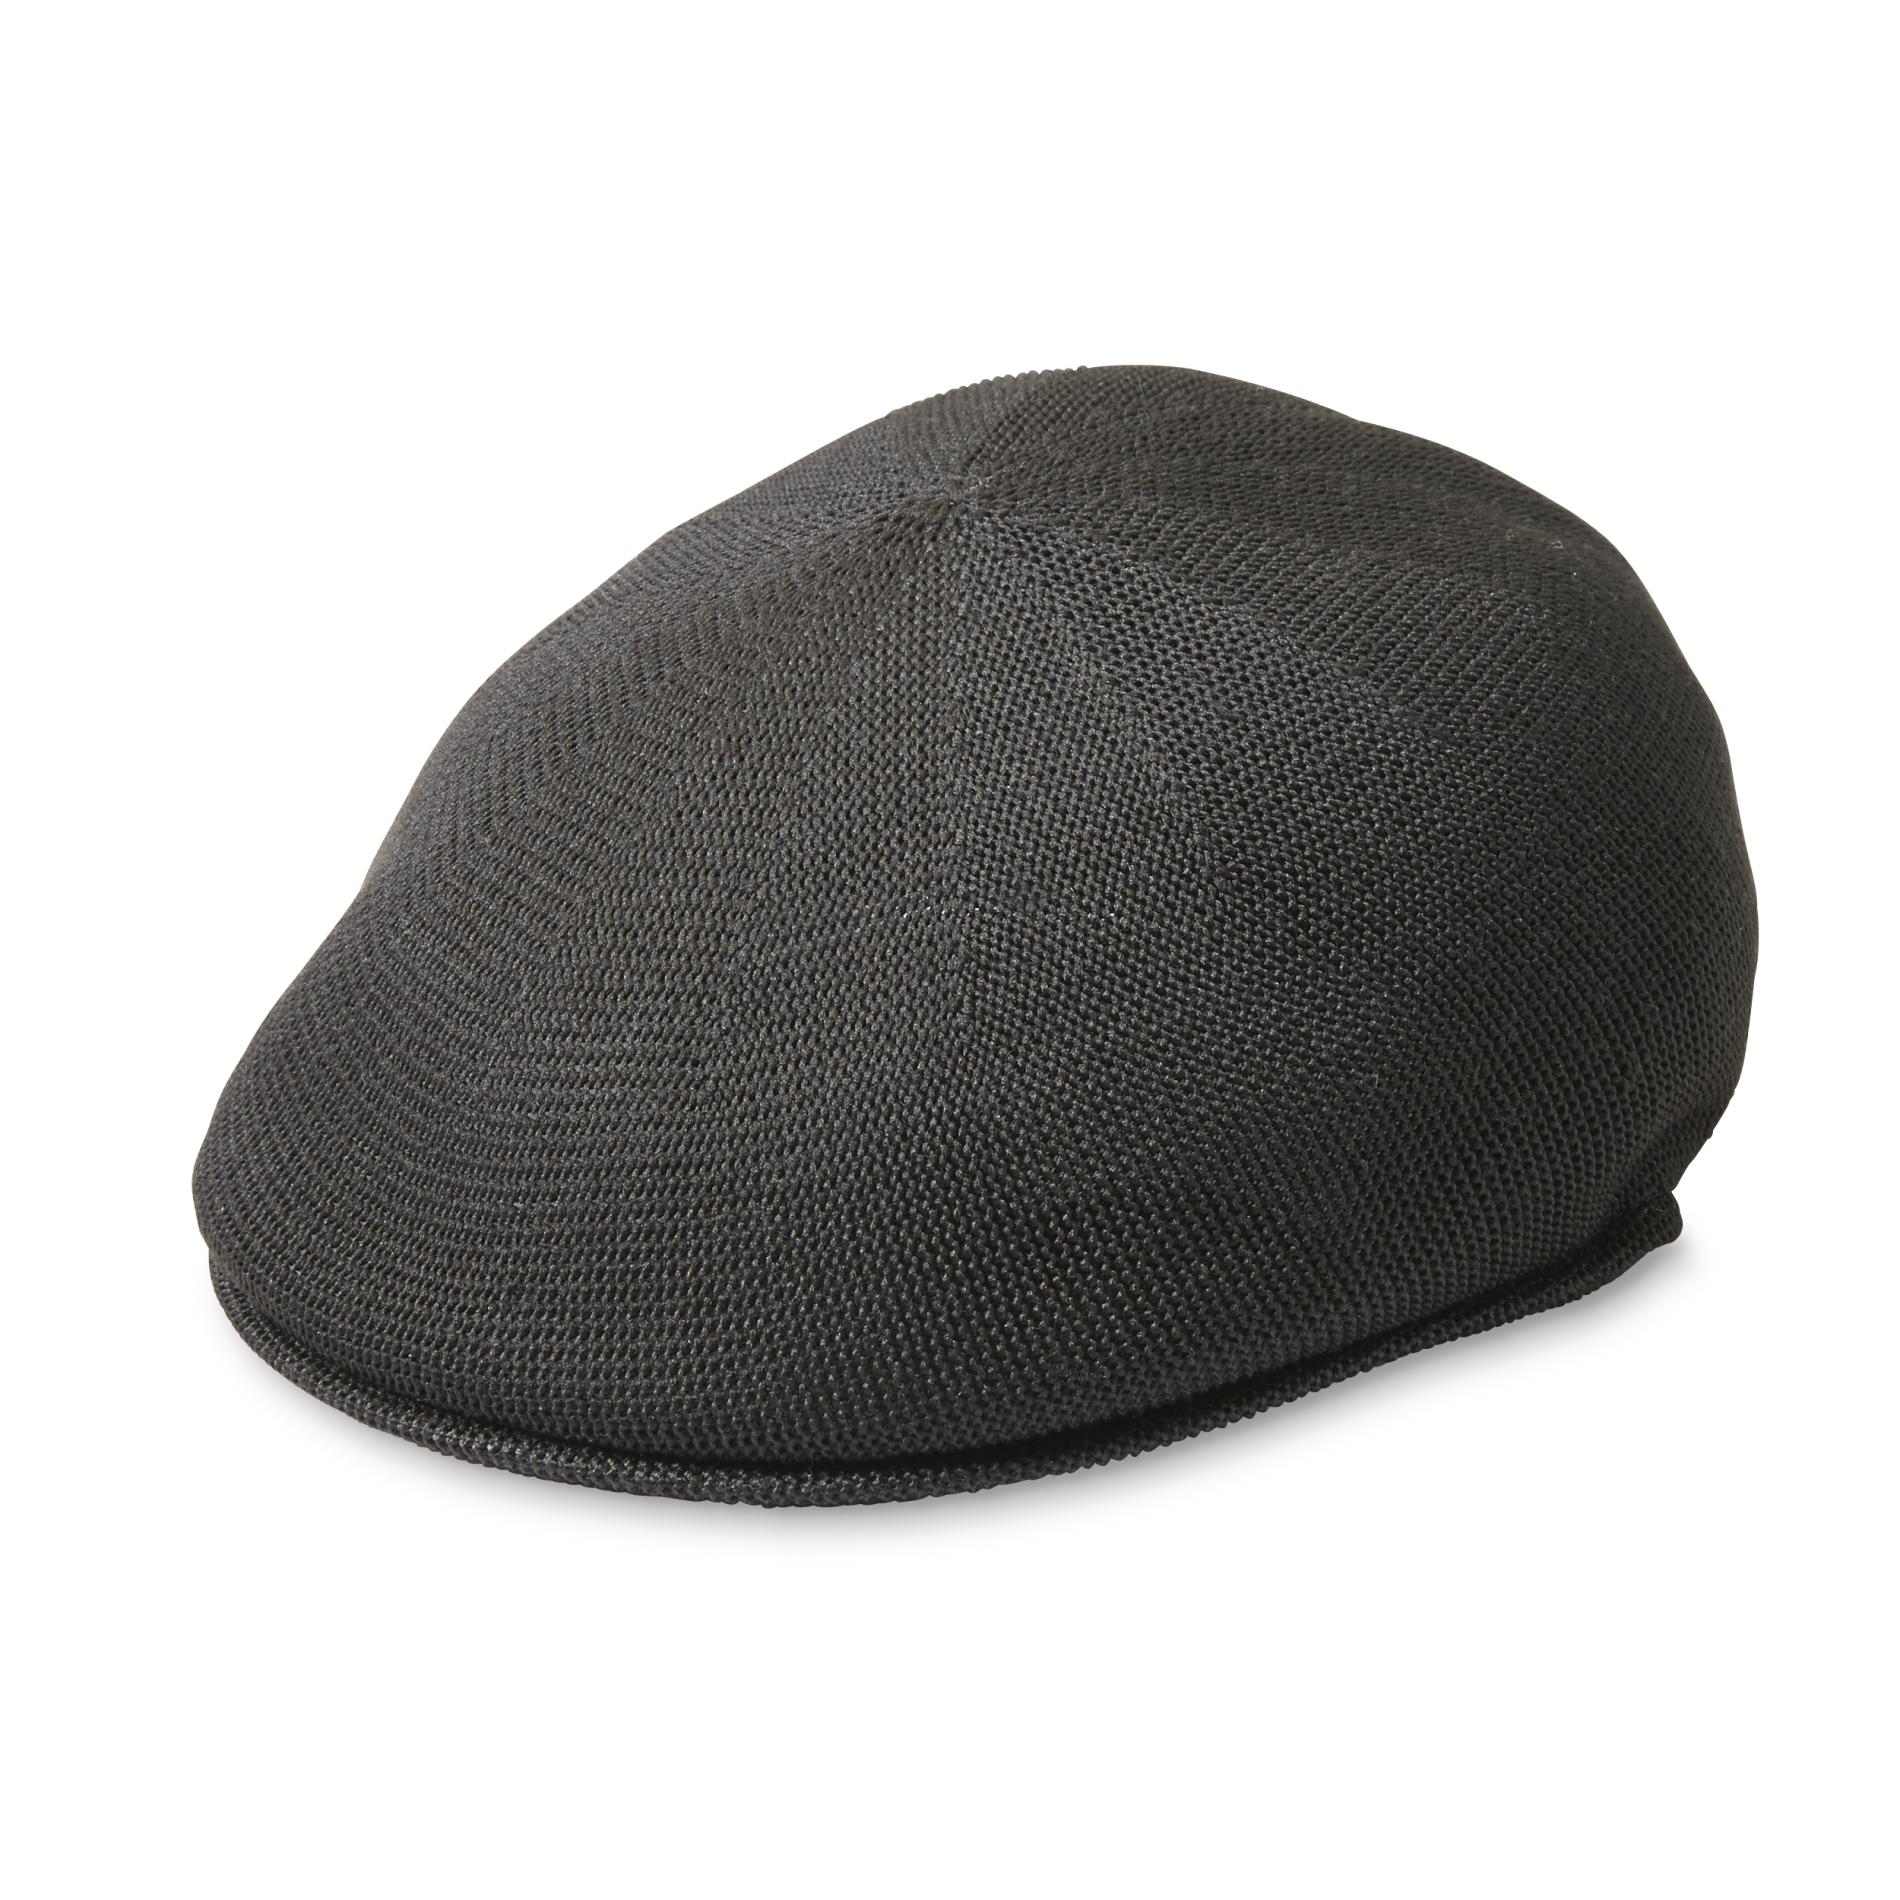 U.S. Polo Assn. Men's Ivy Hat